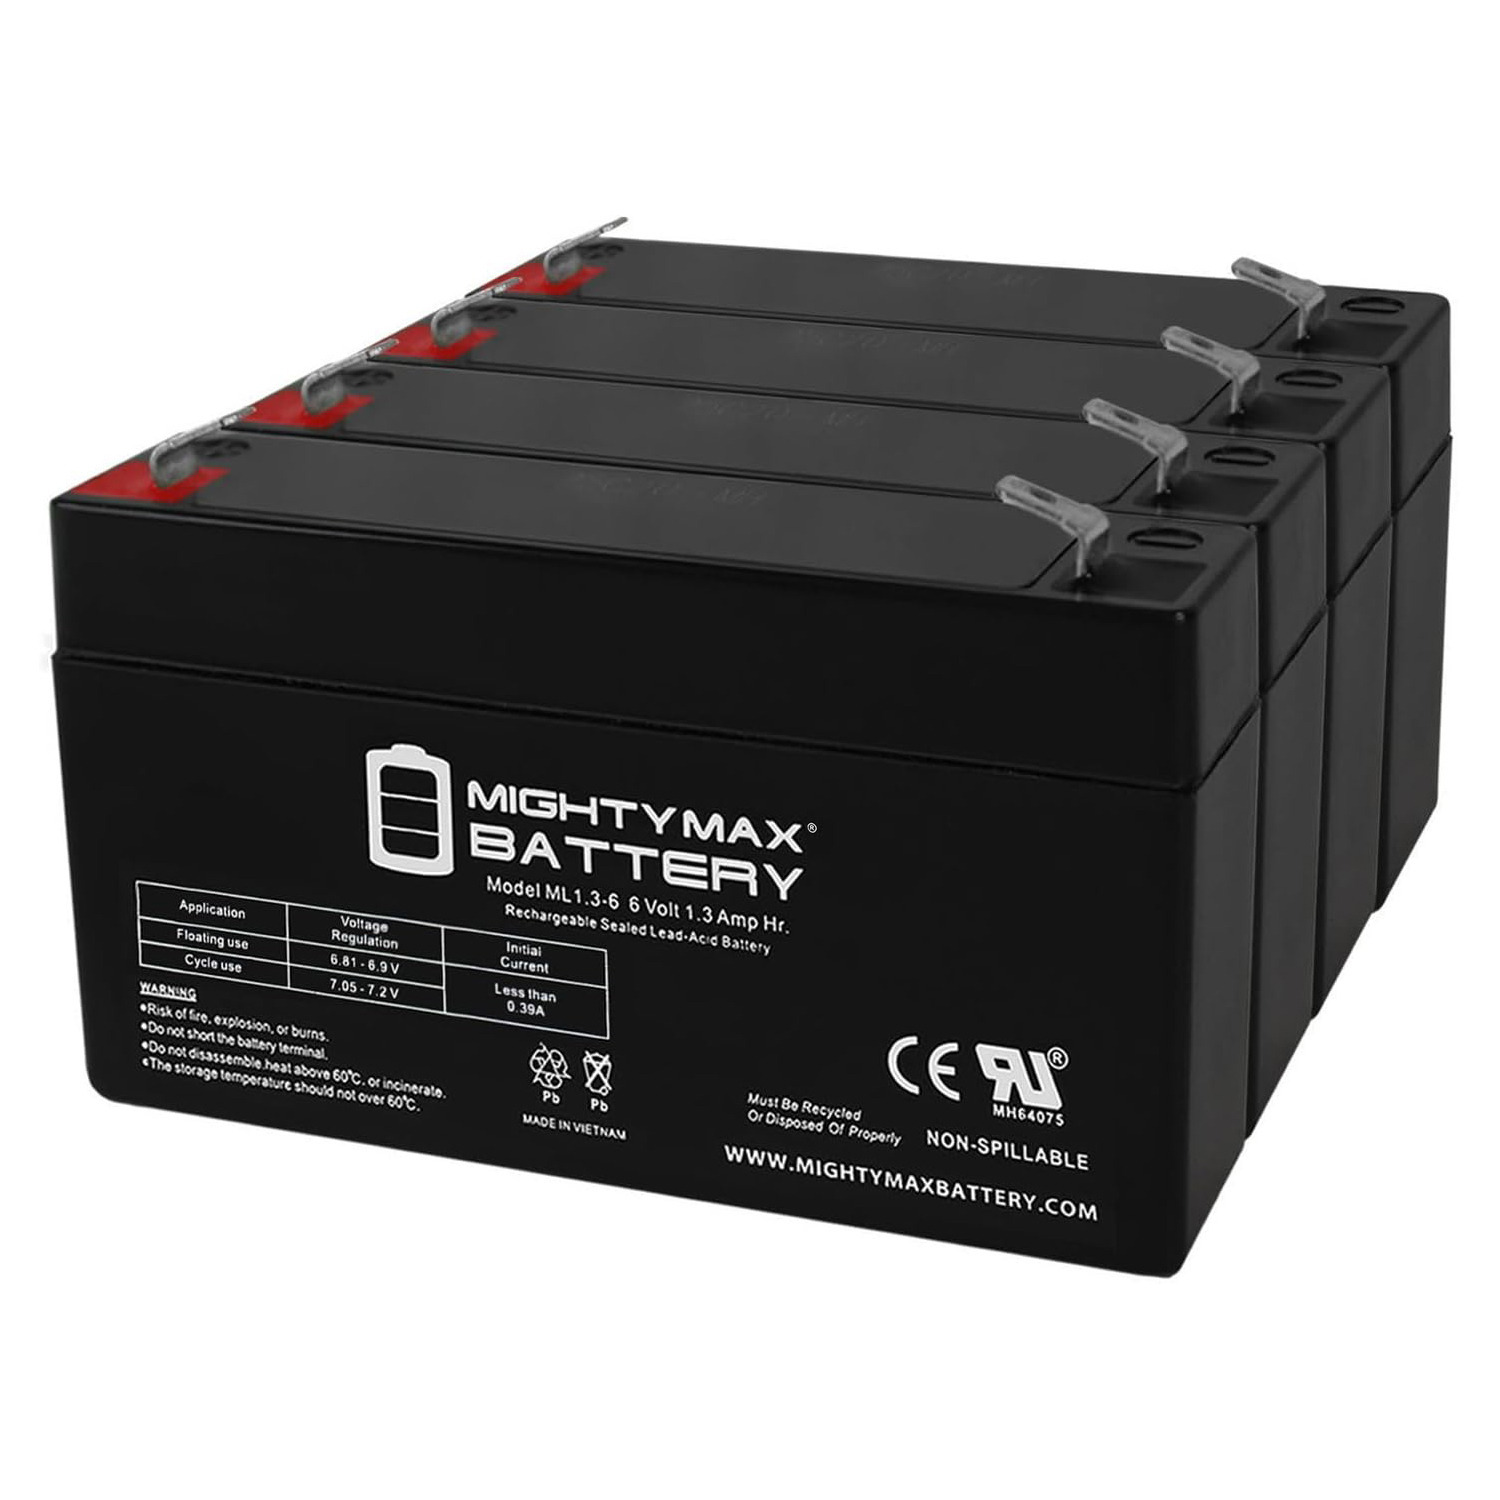 6V 1.3Ah SLA Replacement Battery for Newark NP1.2-6 - 4 Pack